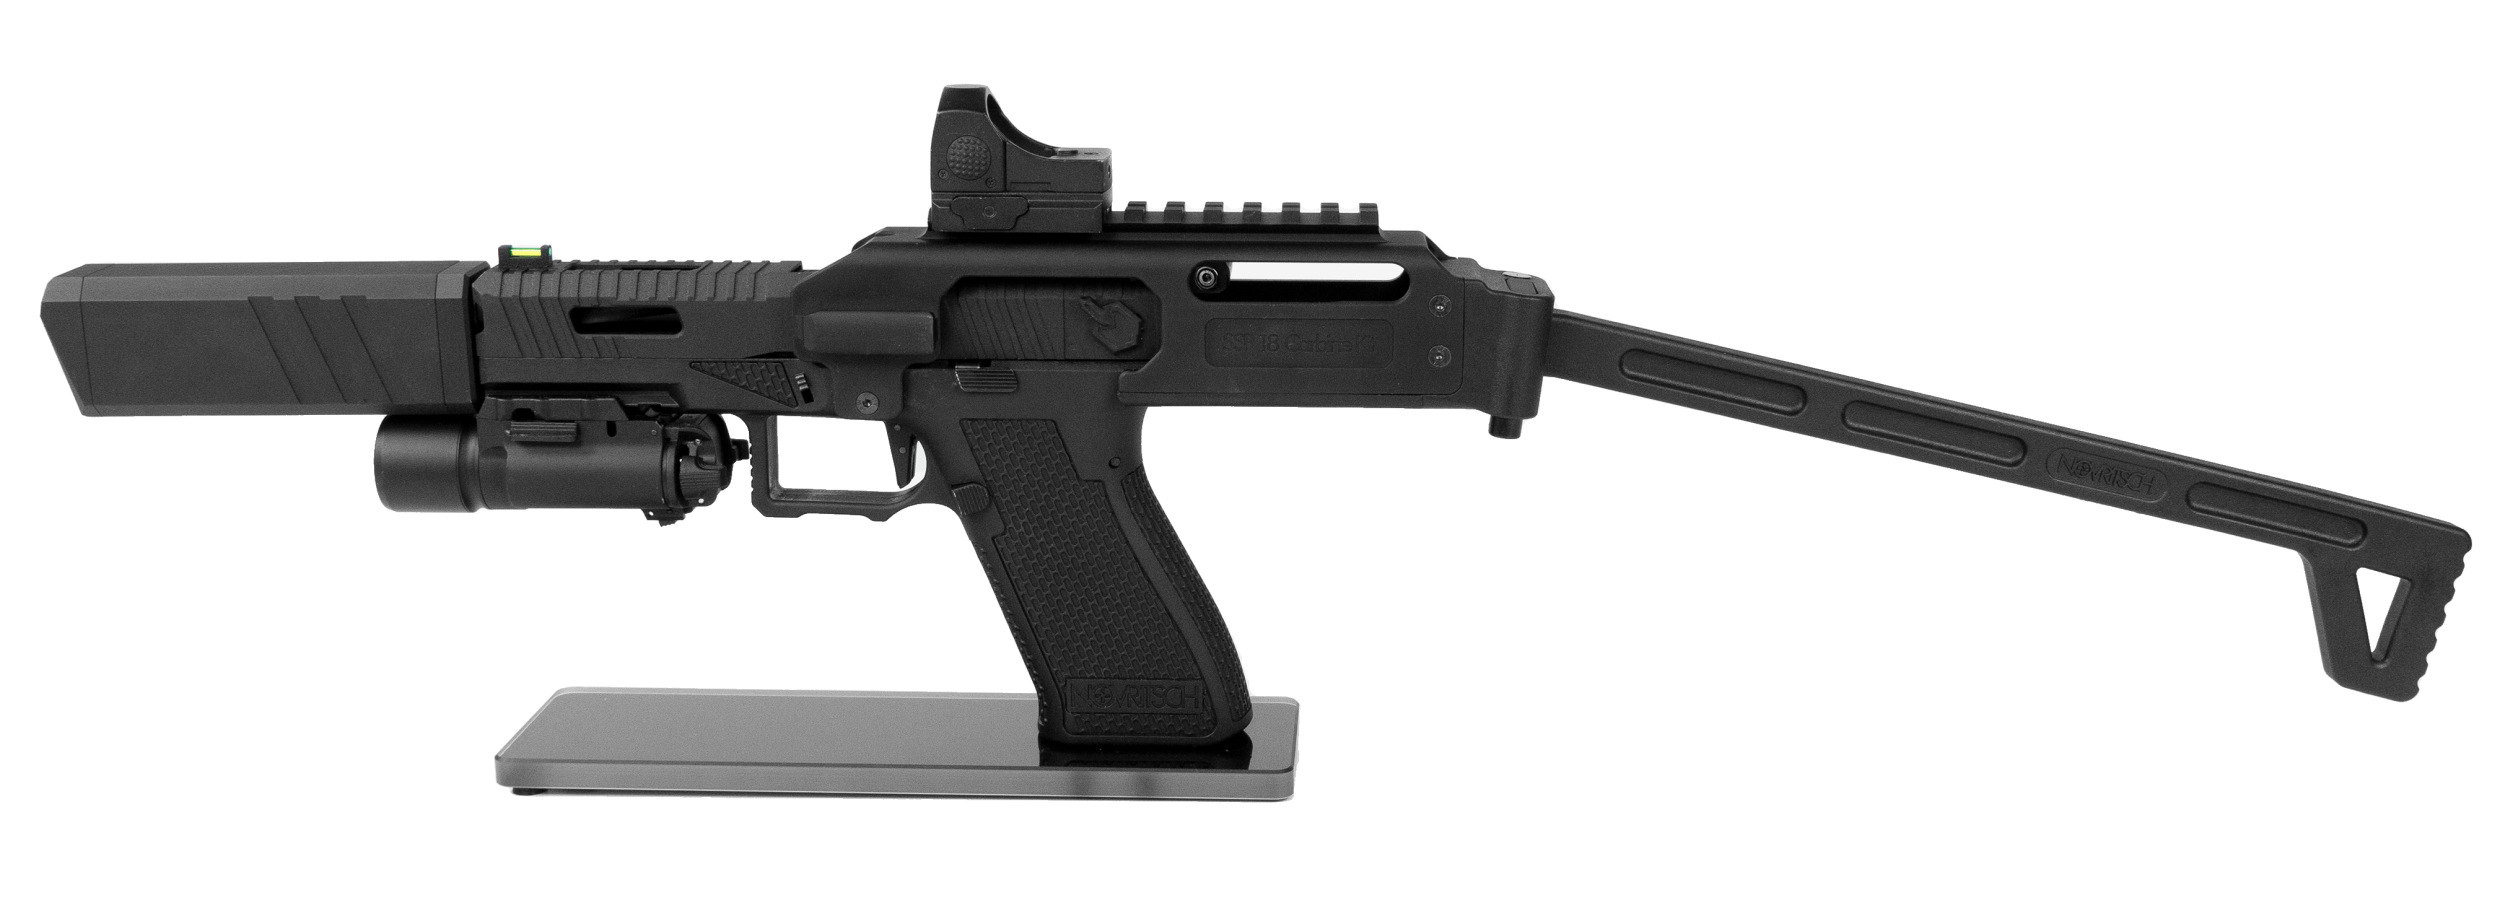 SSP18 Carbine Kit - Sidearm on another level_1